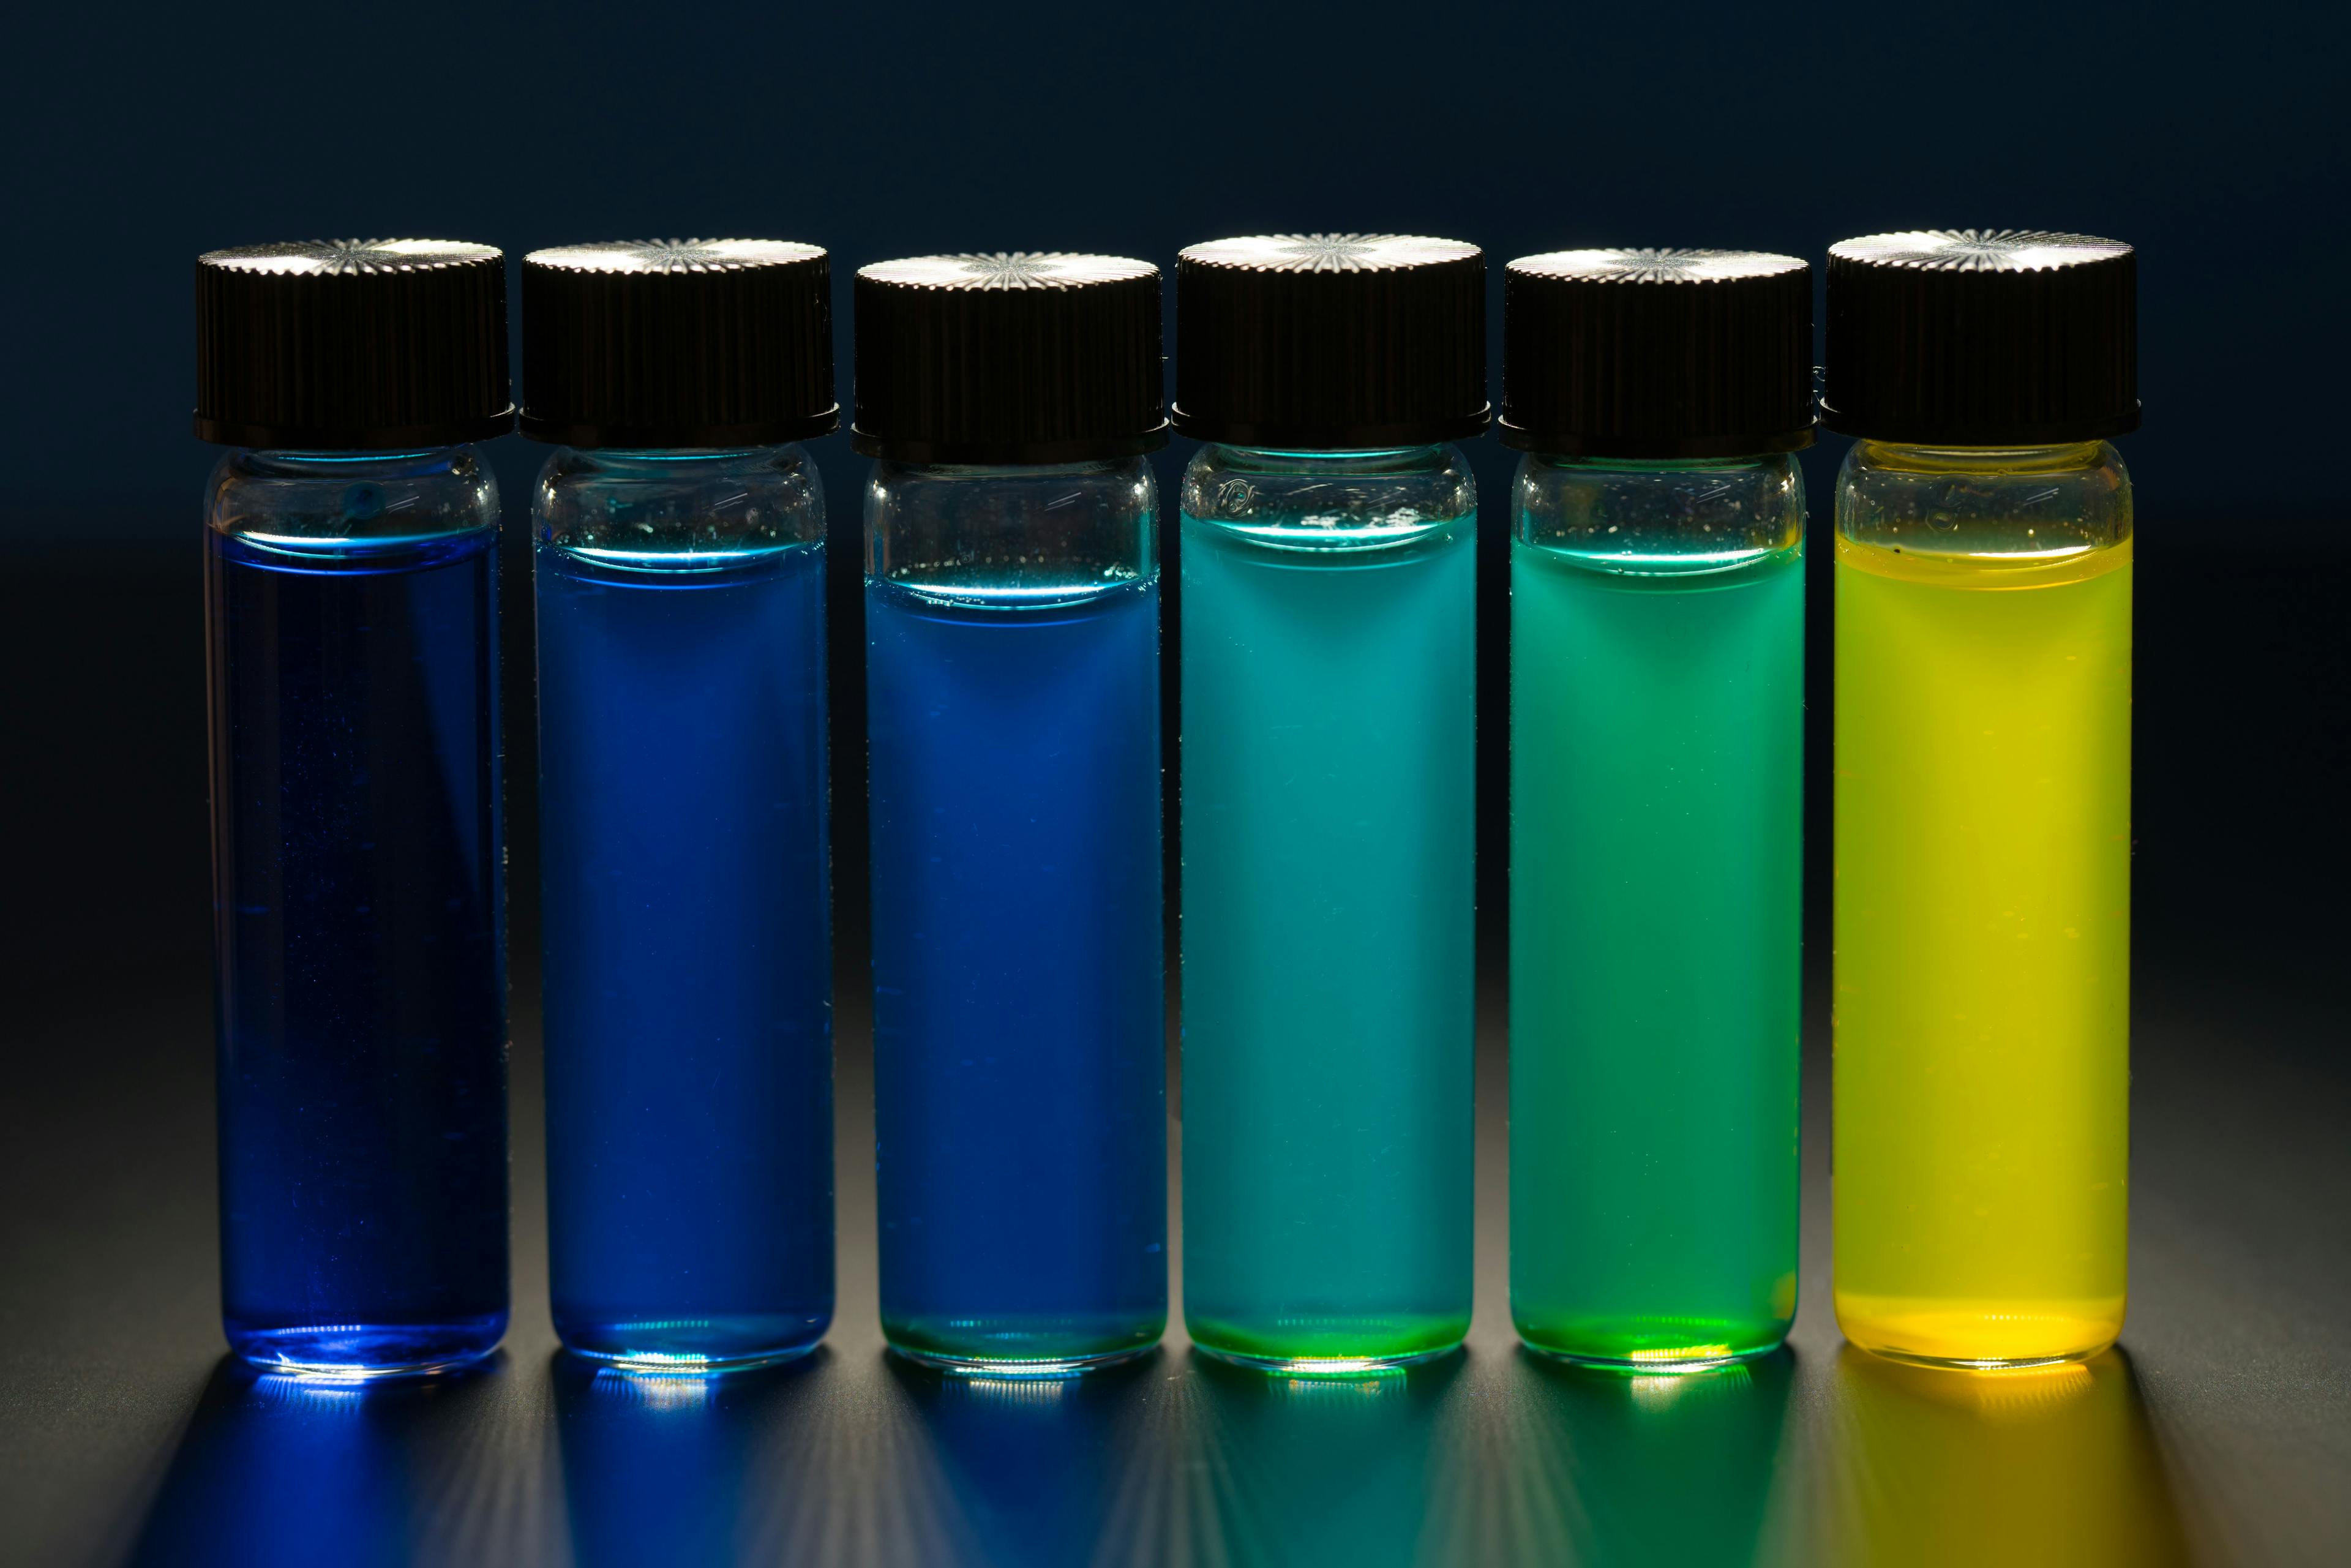 Multi-colored liquid in the vials | Image Credit: © luchschenF - stock.adobe.com